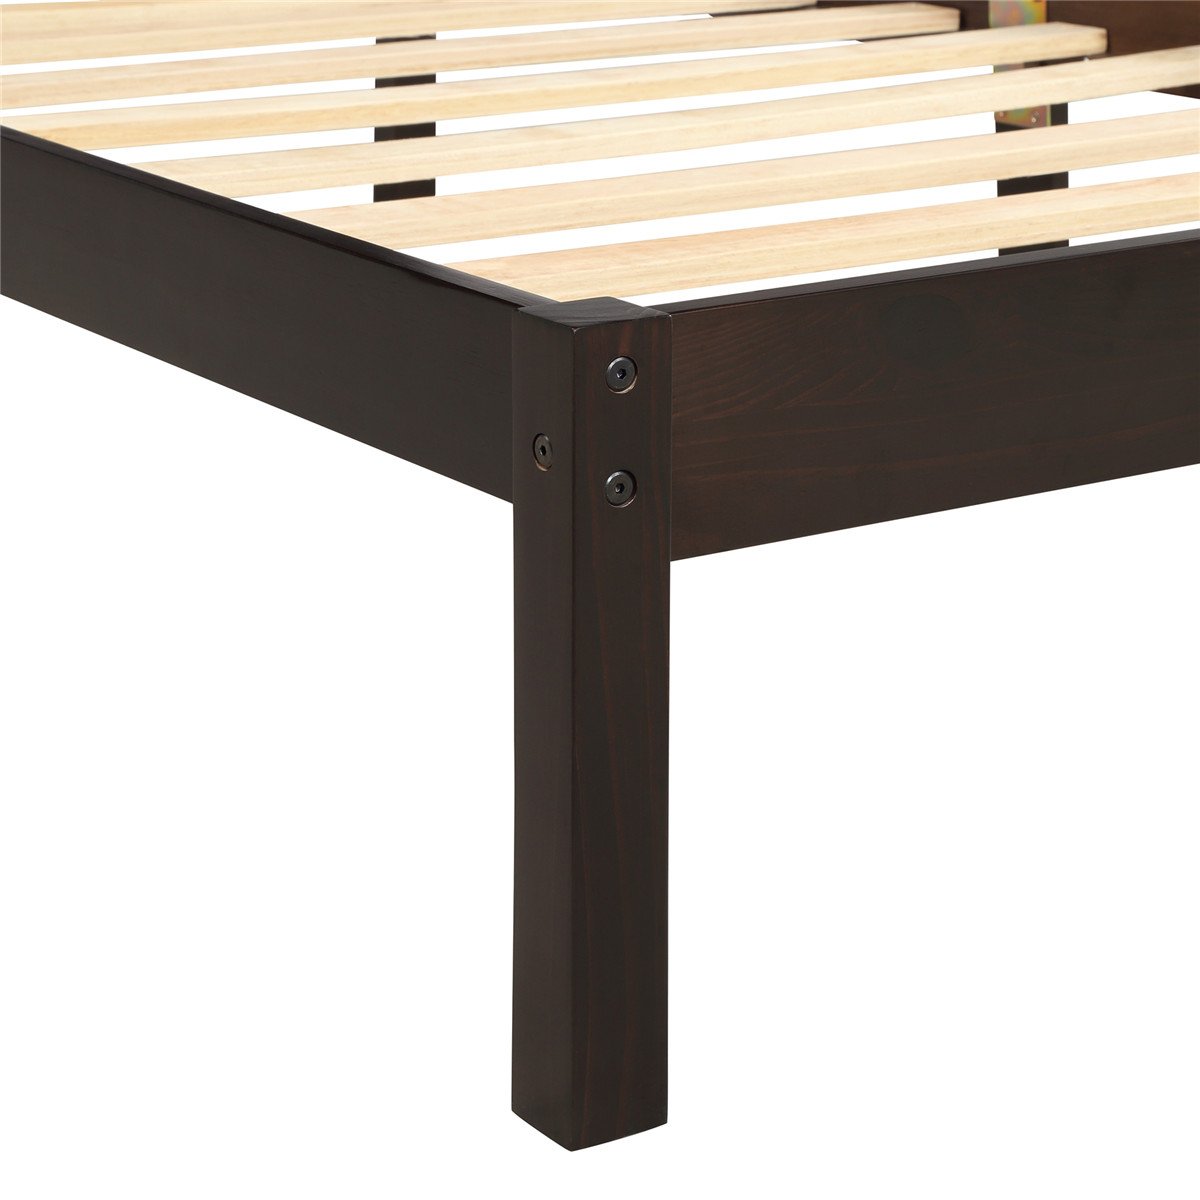 Wood Platform Bed with Headboard | Wood Slat | Twin